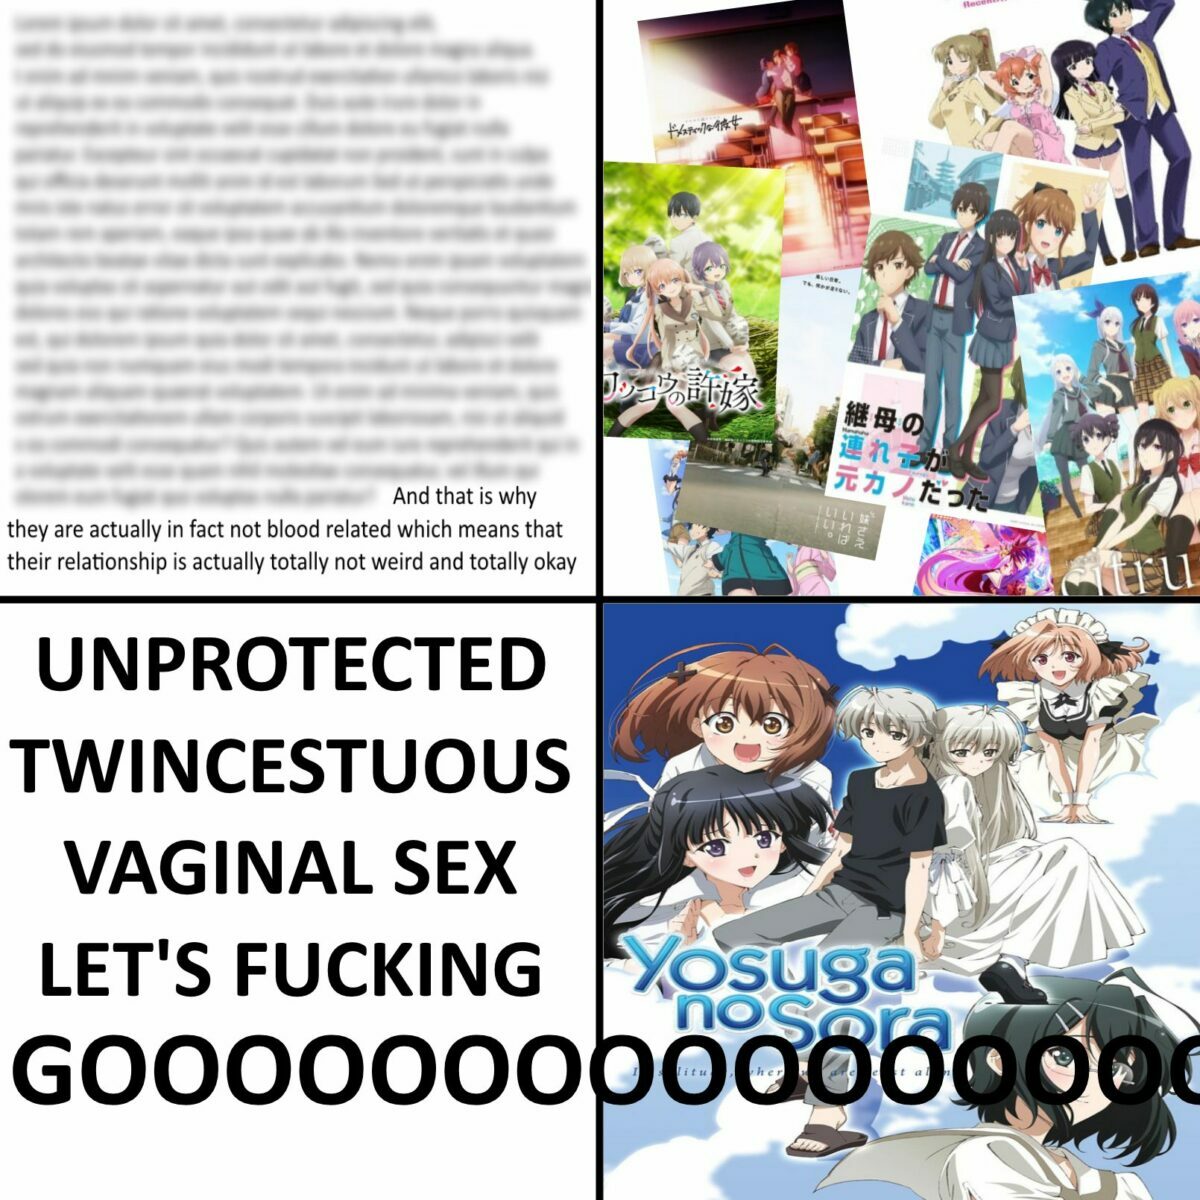 Yosuga No Sora Incest Anime Meme